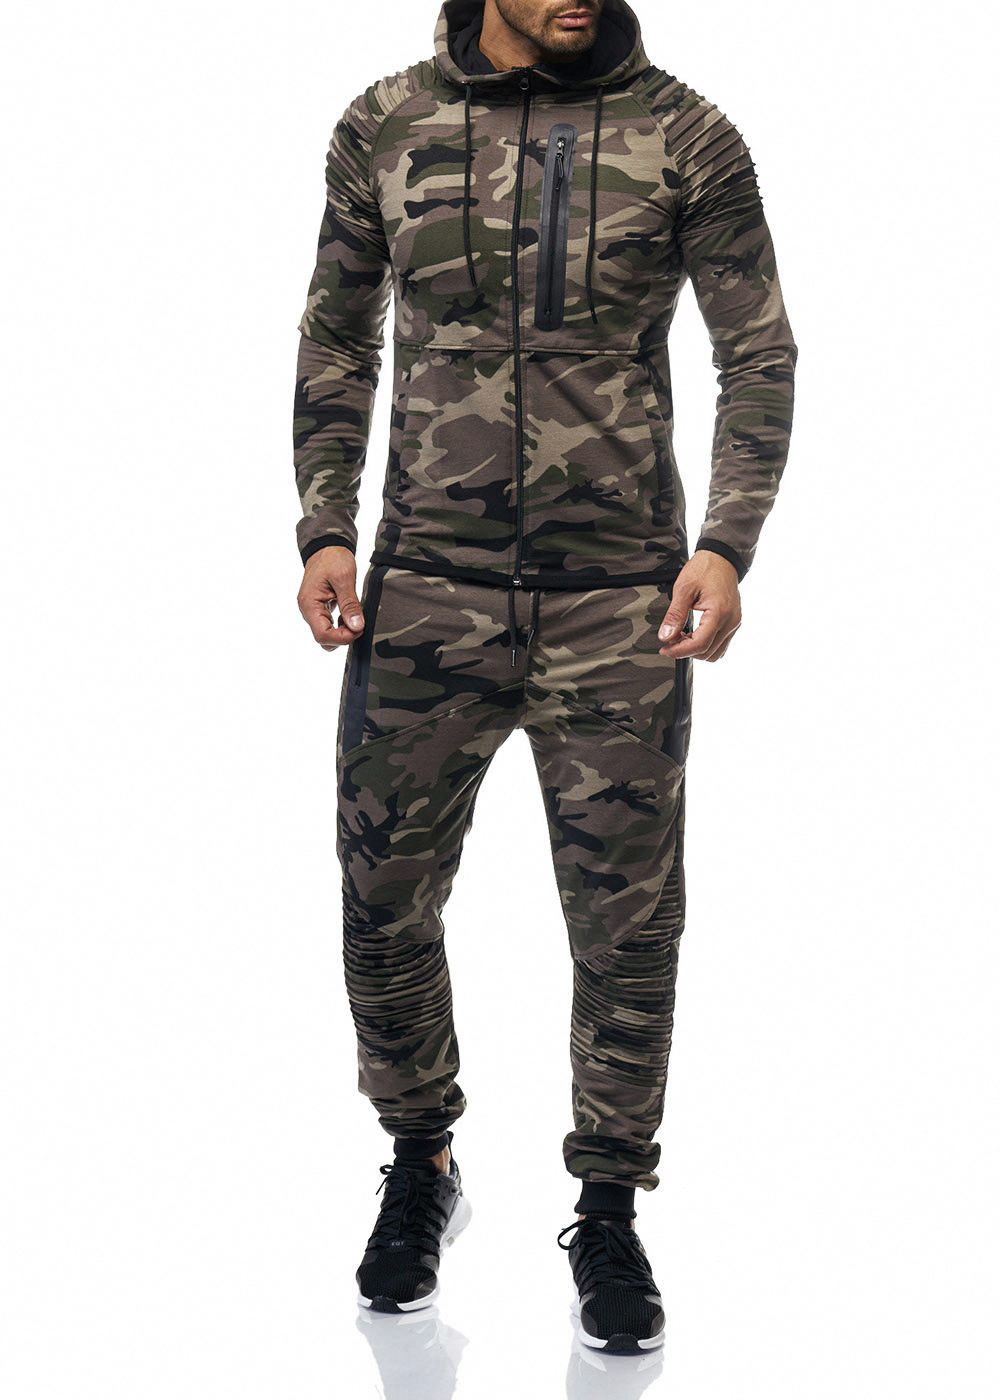 Fatal Fashion Mens Army Camouflage Design Camo Tracksuit Hoodie Zipper Joggers 2 Piece Multi Camo Suit 